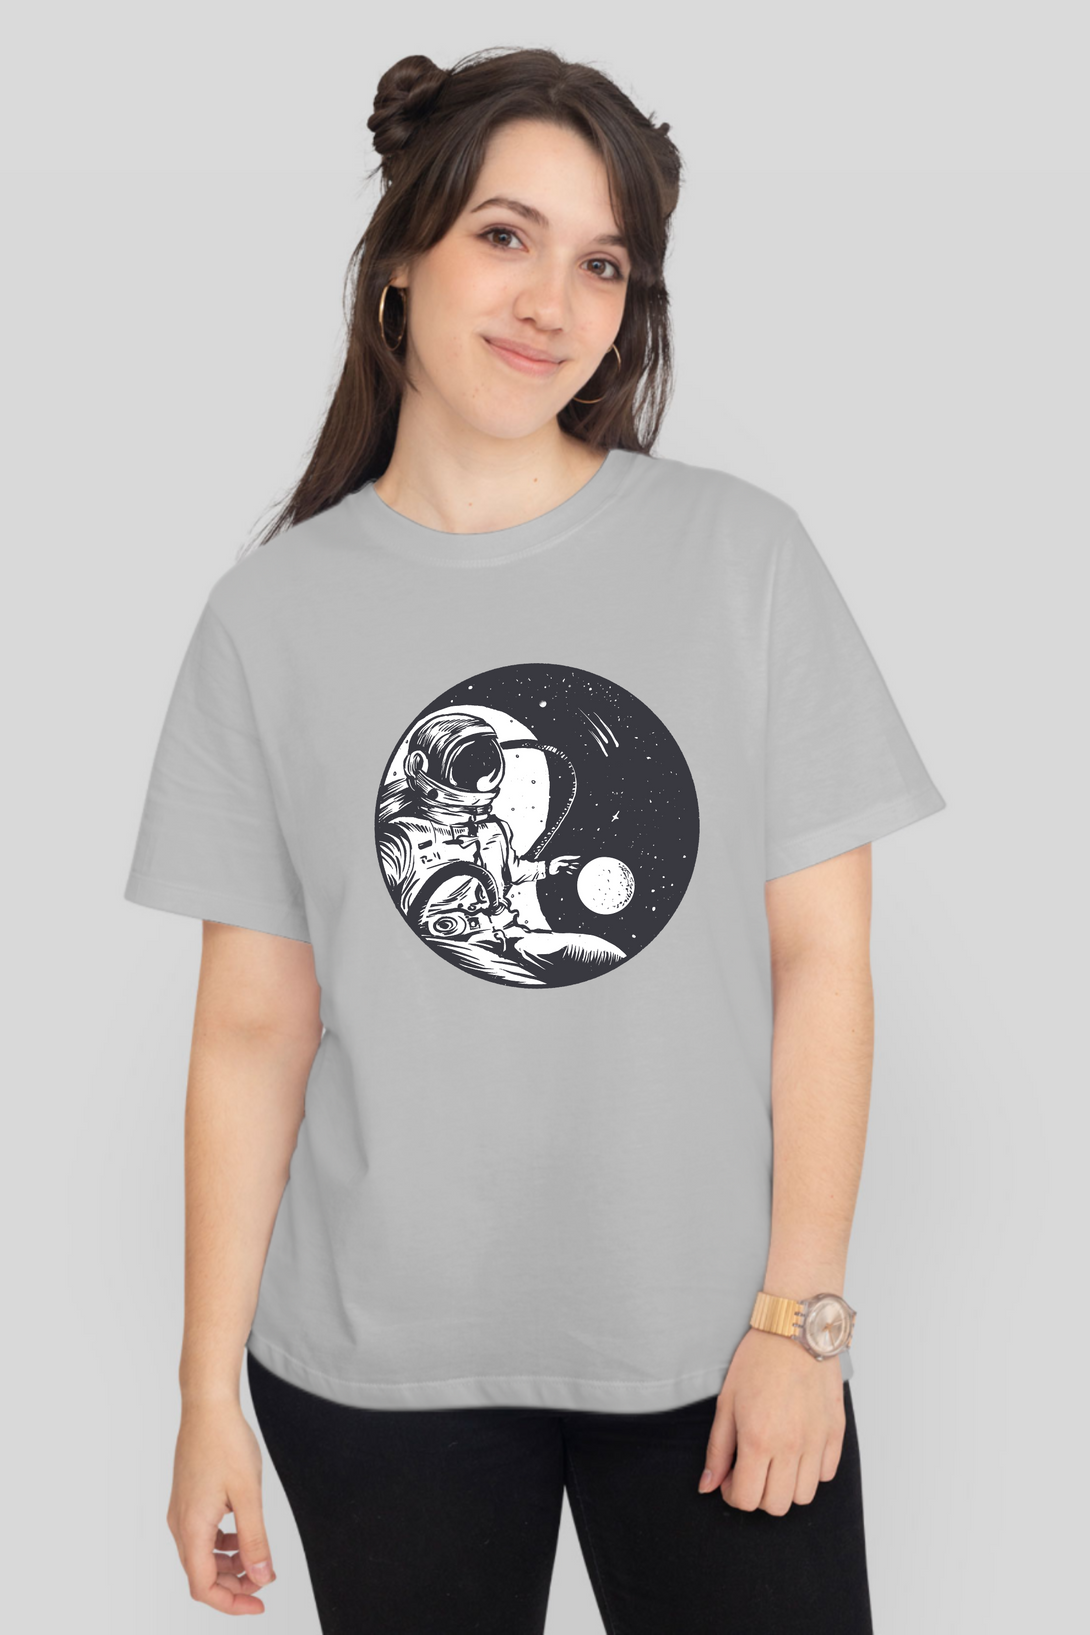 Cosmic Balance Printed T-Shirt For Women - WowWaves - 9